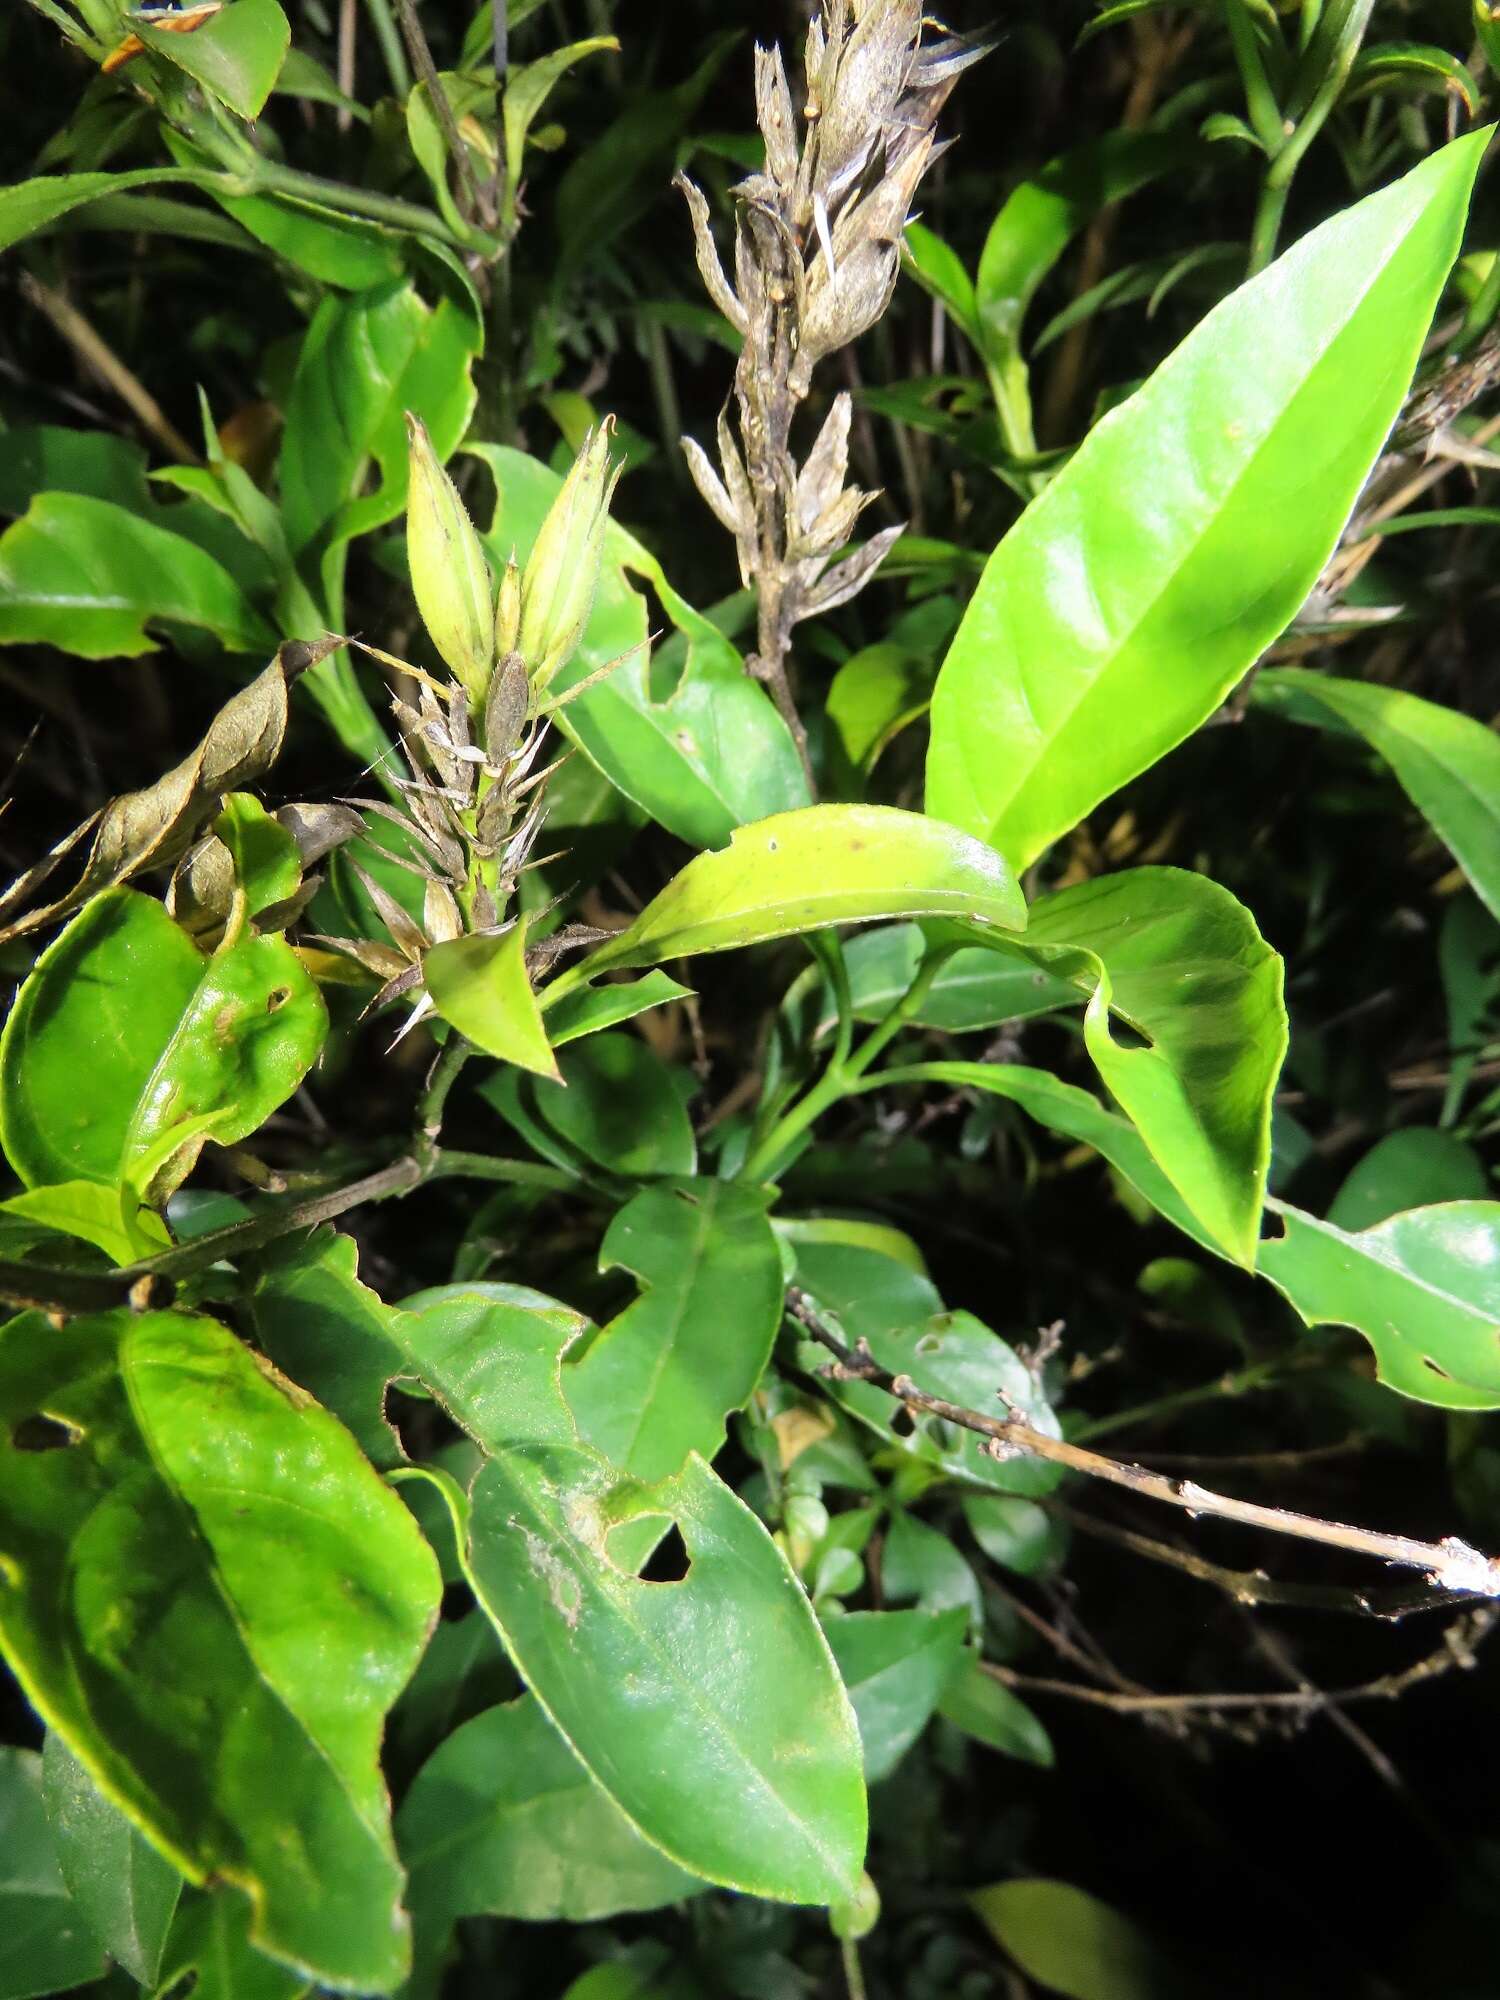 Image of Barleria prionitis subsp. delagoensis (Obermeyer) R. K. Brummitt & J. R. I. Wood